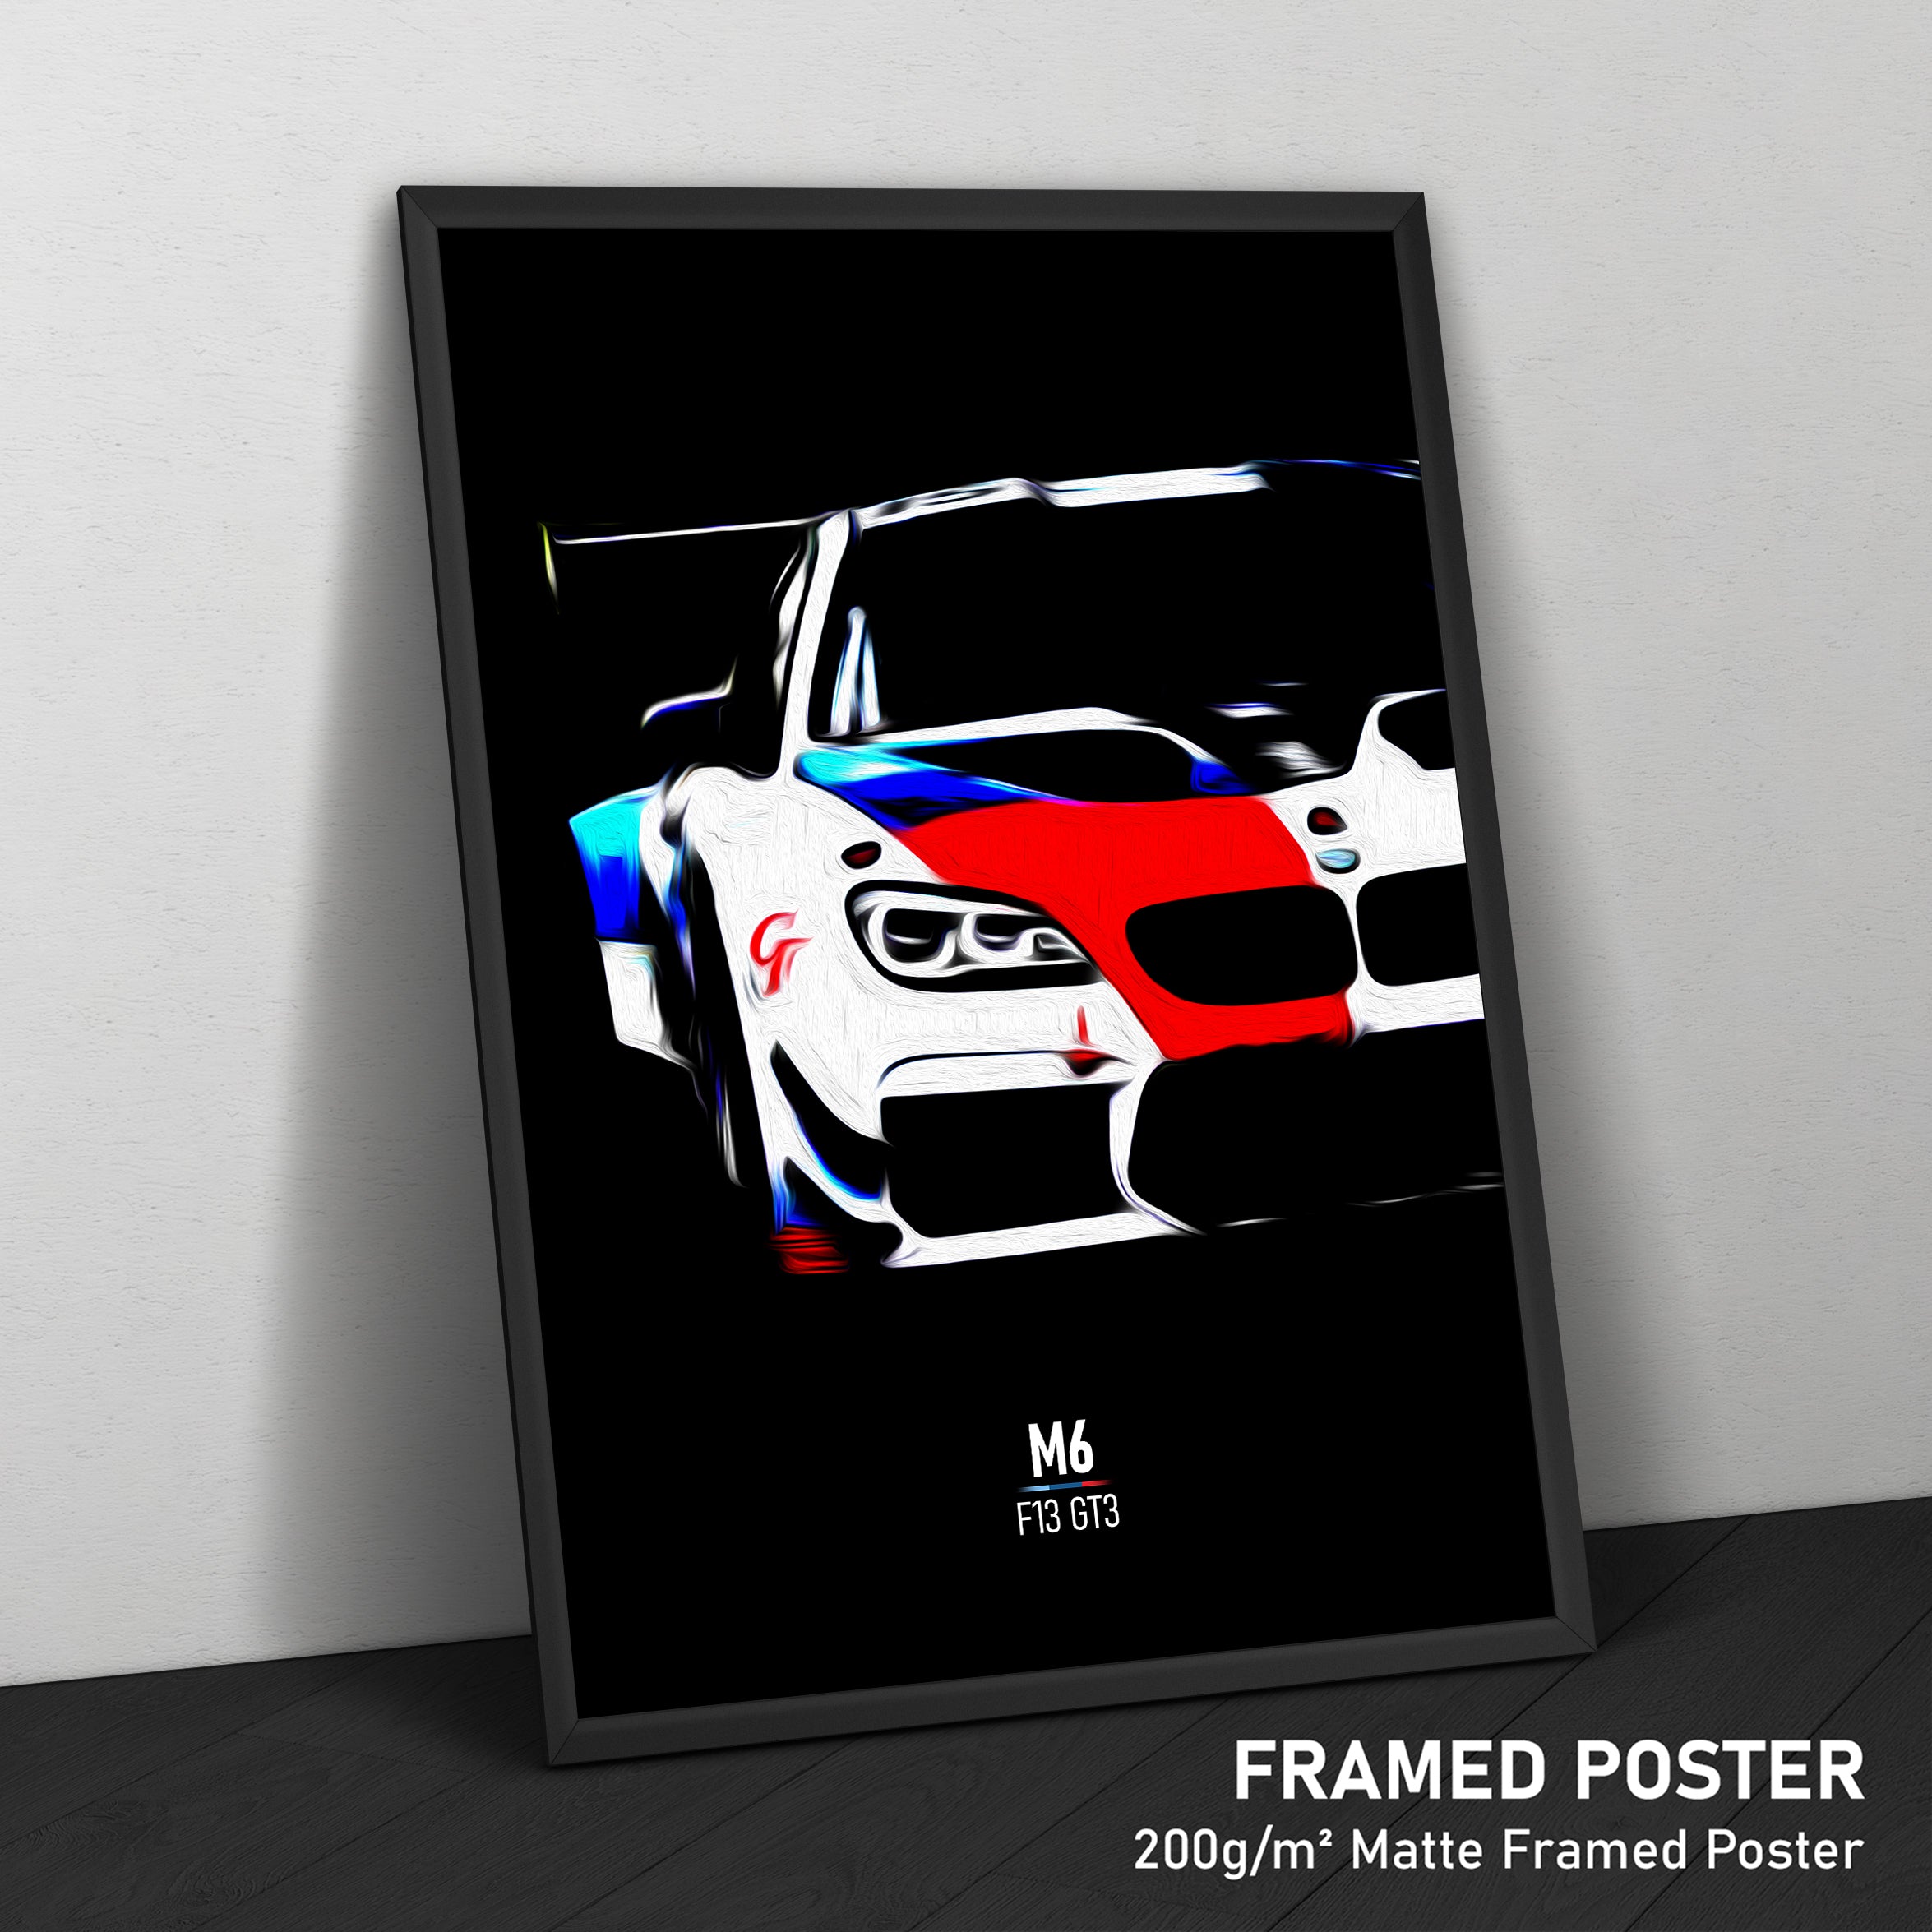 BMW M6 F13 GT3 - Race Car Print